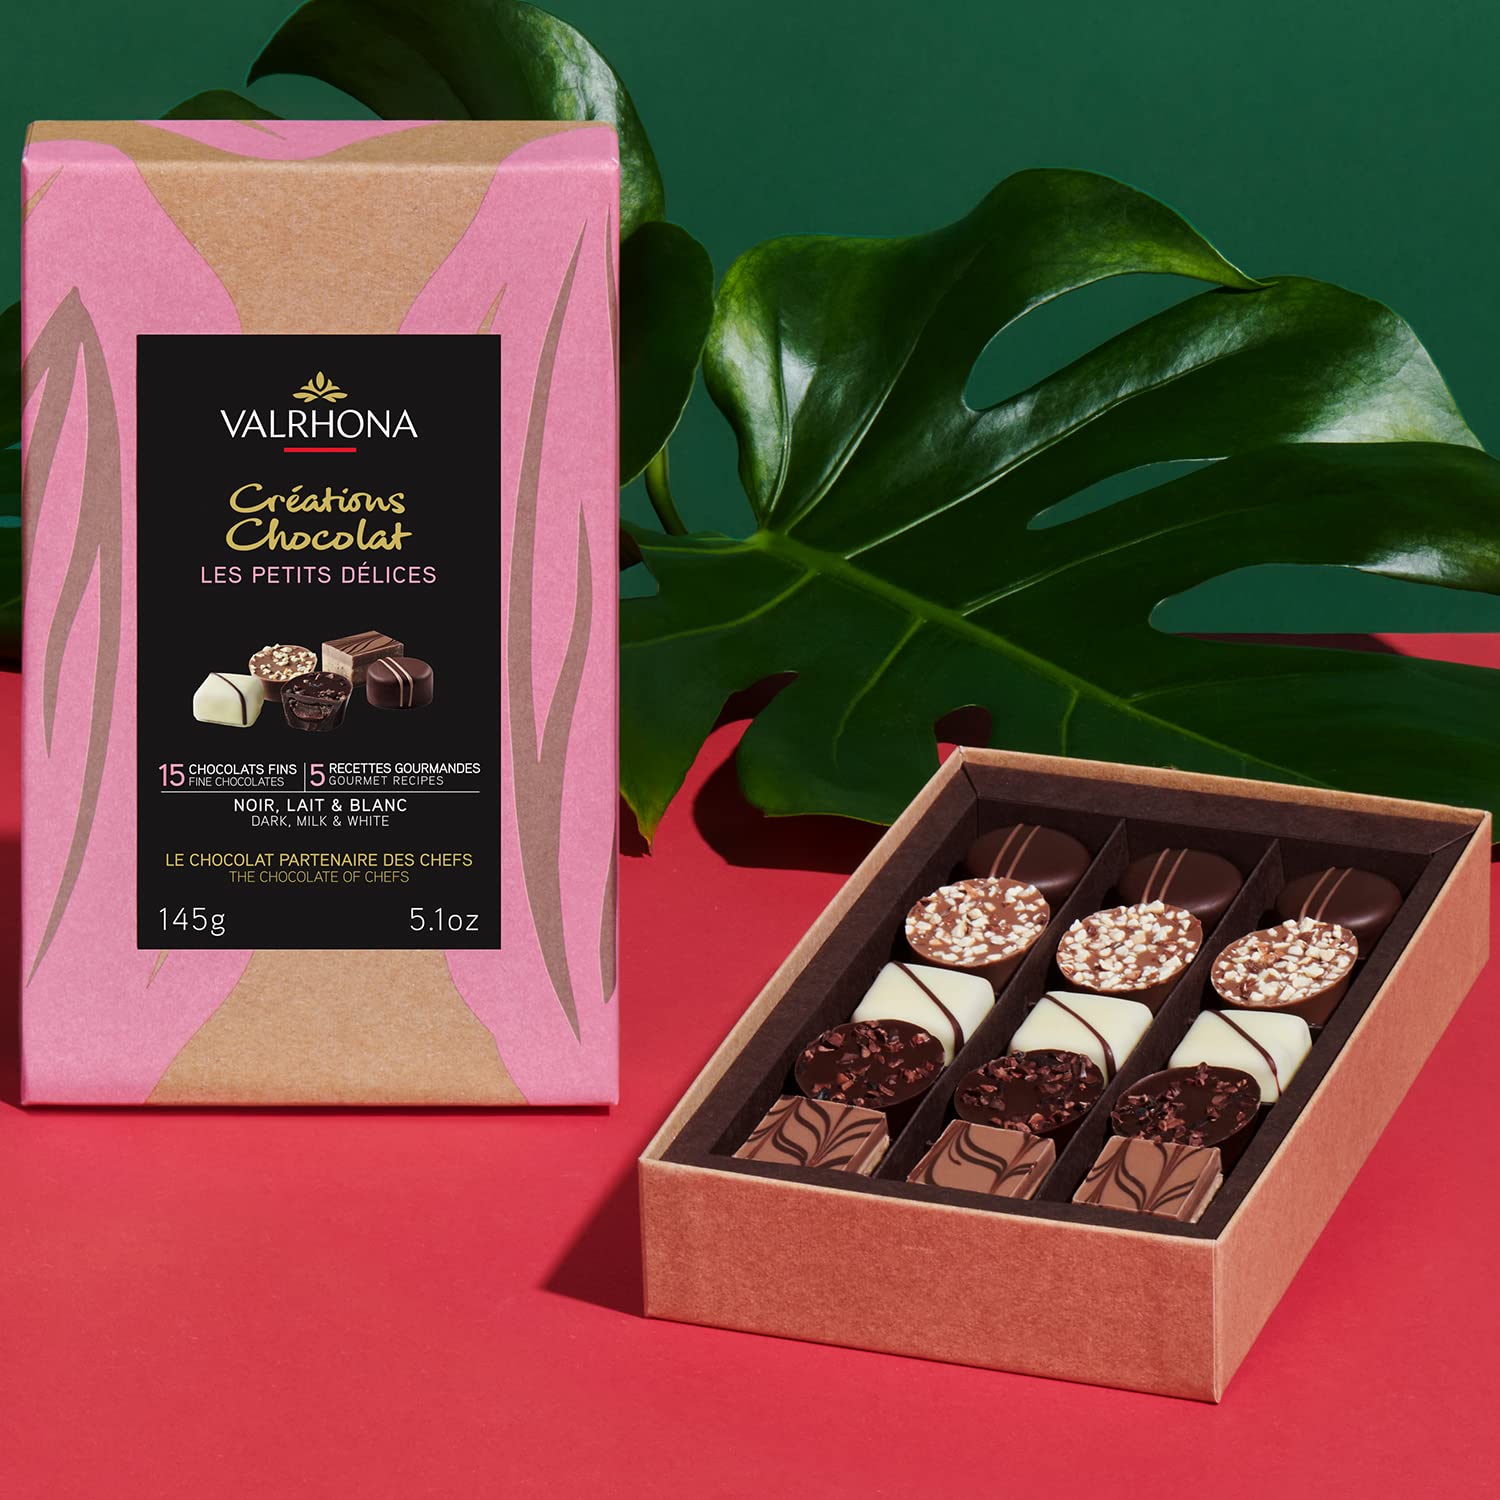 Valrhona Assorted Chocolate Ballotin Gift Box (25 Piece) – Bar & Cocoa